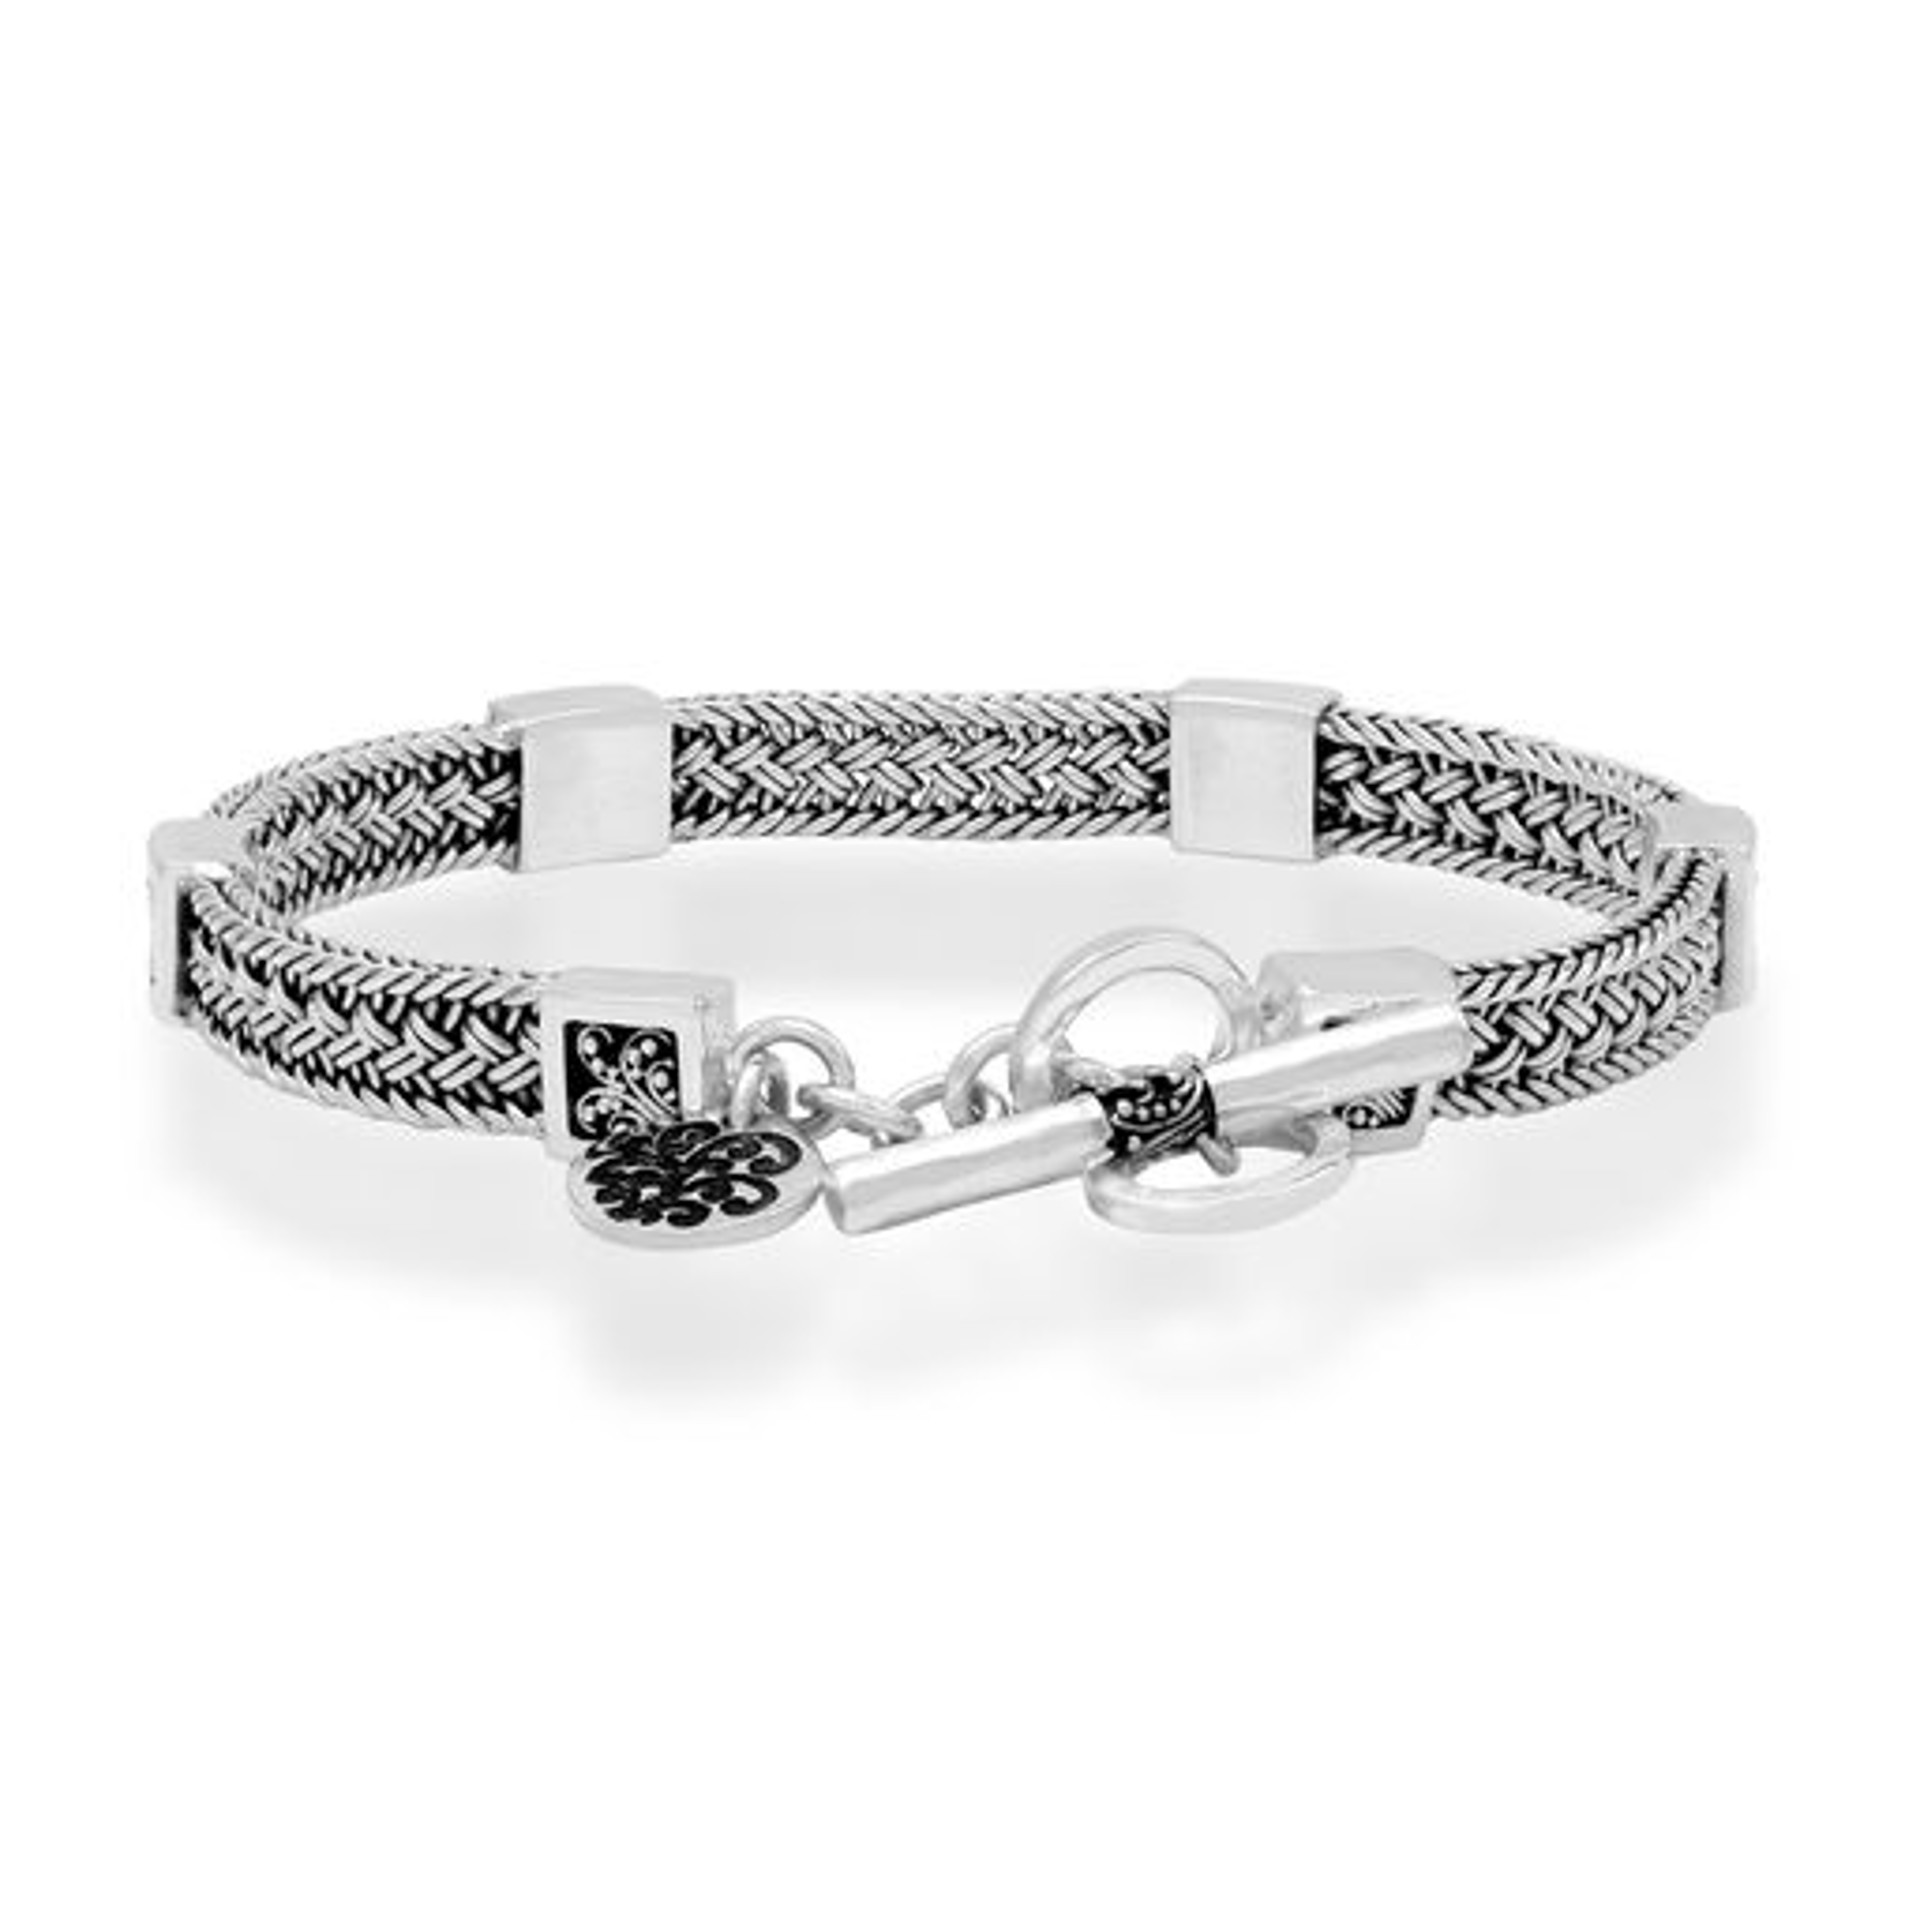 6915 Sterling Silver Bracelet Large by Lois Hill